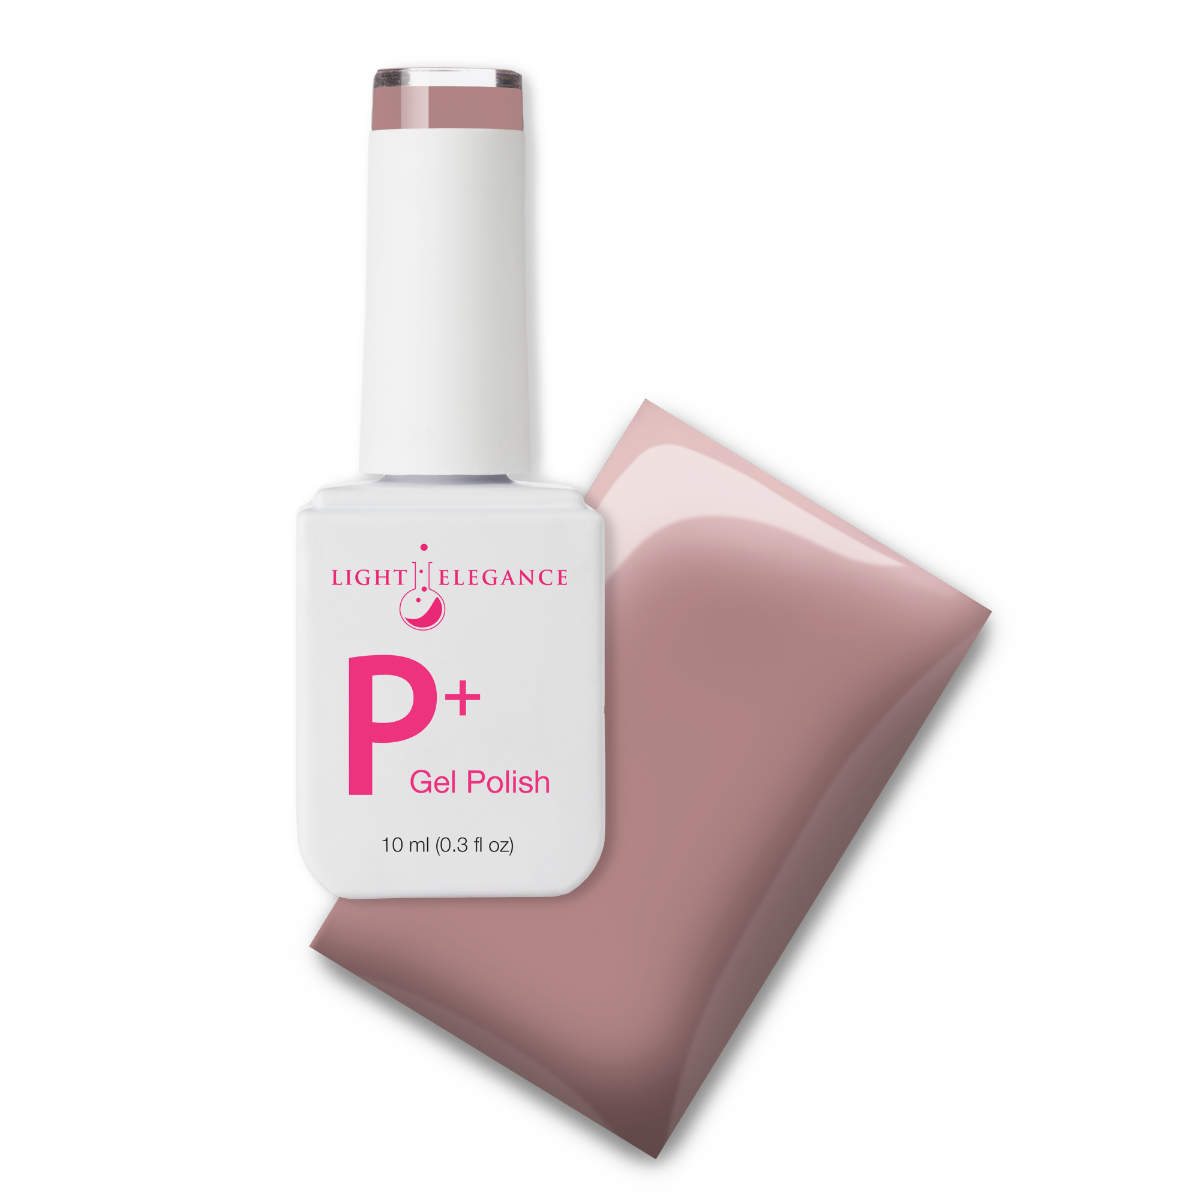 Light Elegance P+ Color Essentials Bundle - Creata Beauty - Professional Beauty Products